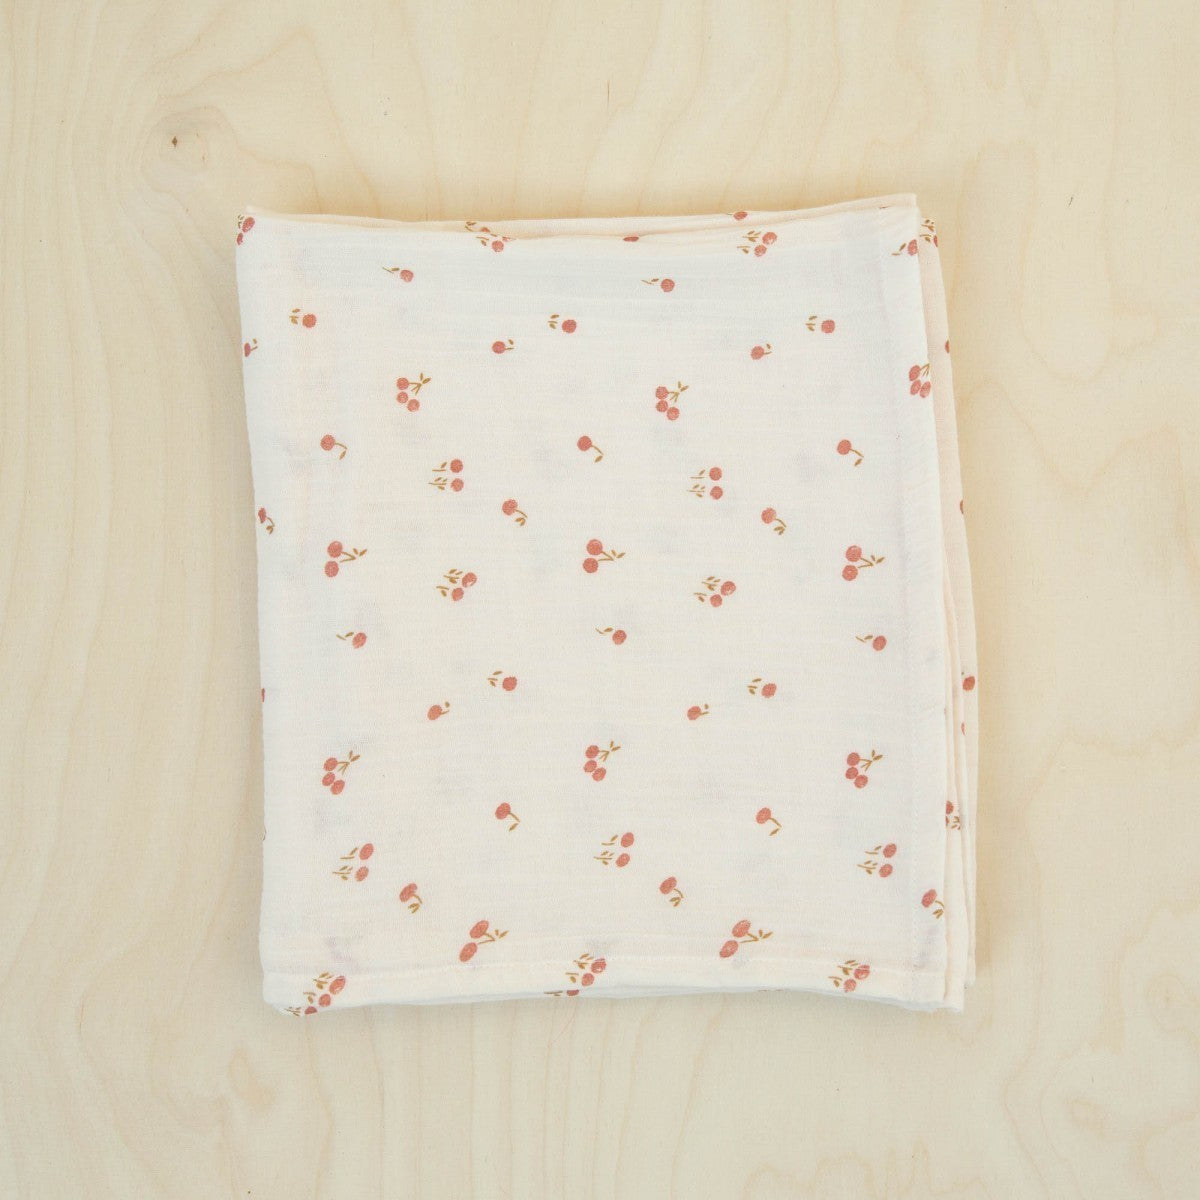 Gabrielle Paris - 有機棉紗布包巾 - Blossom dragée